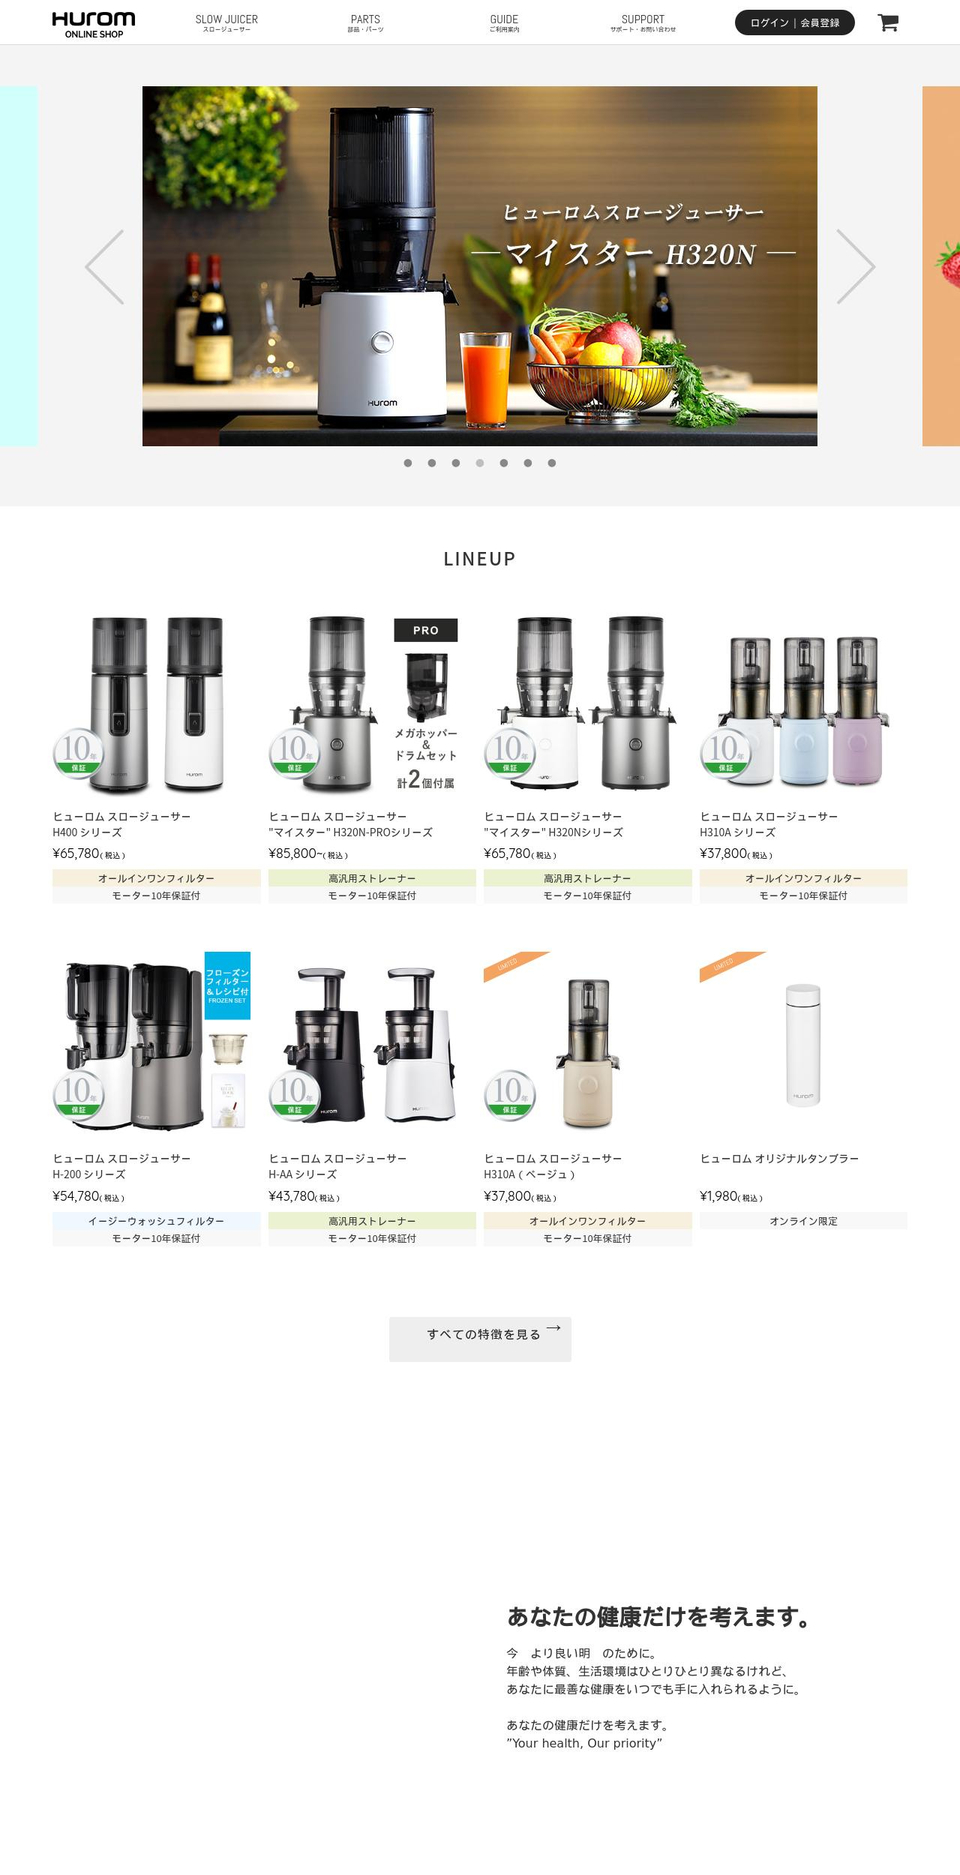 hurom.jp shopify website screenshot